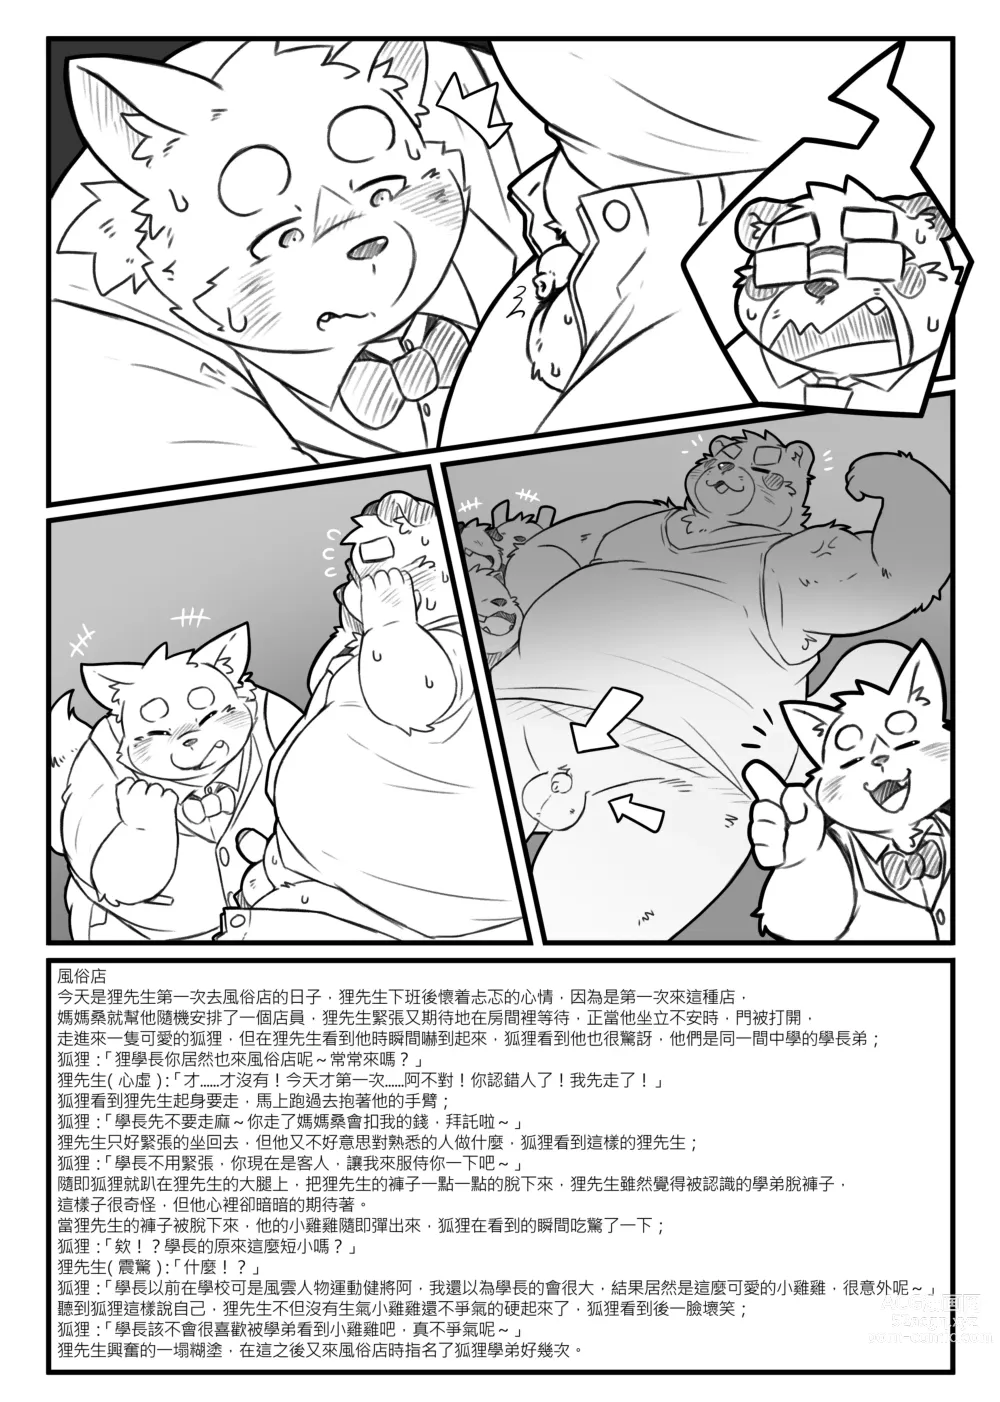 Page 10 of manga sketch book